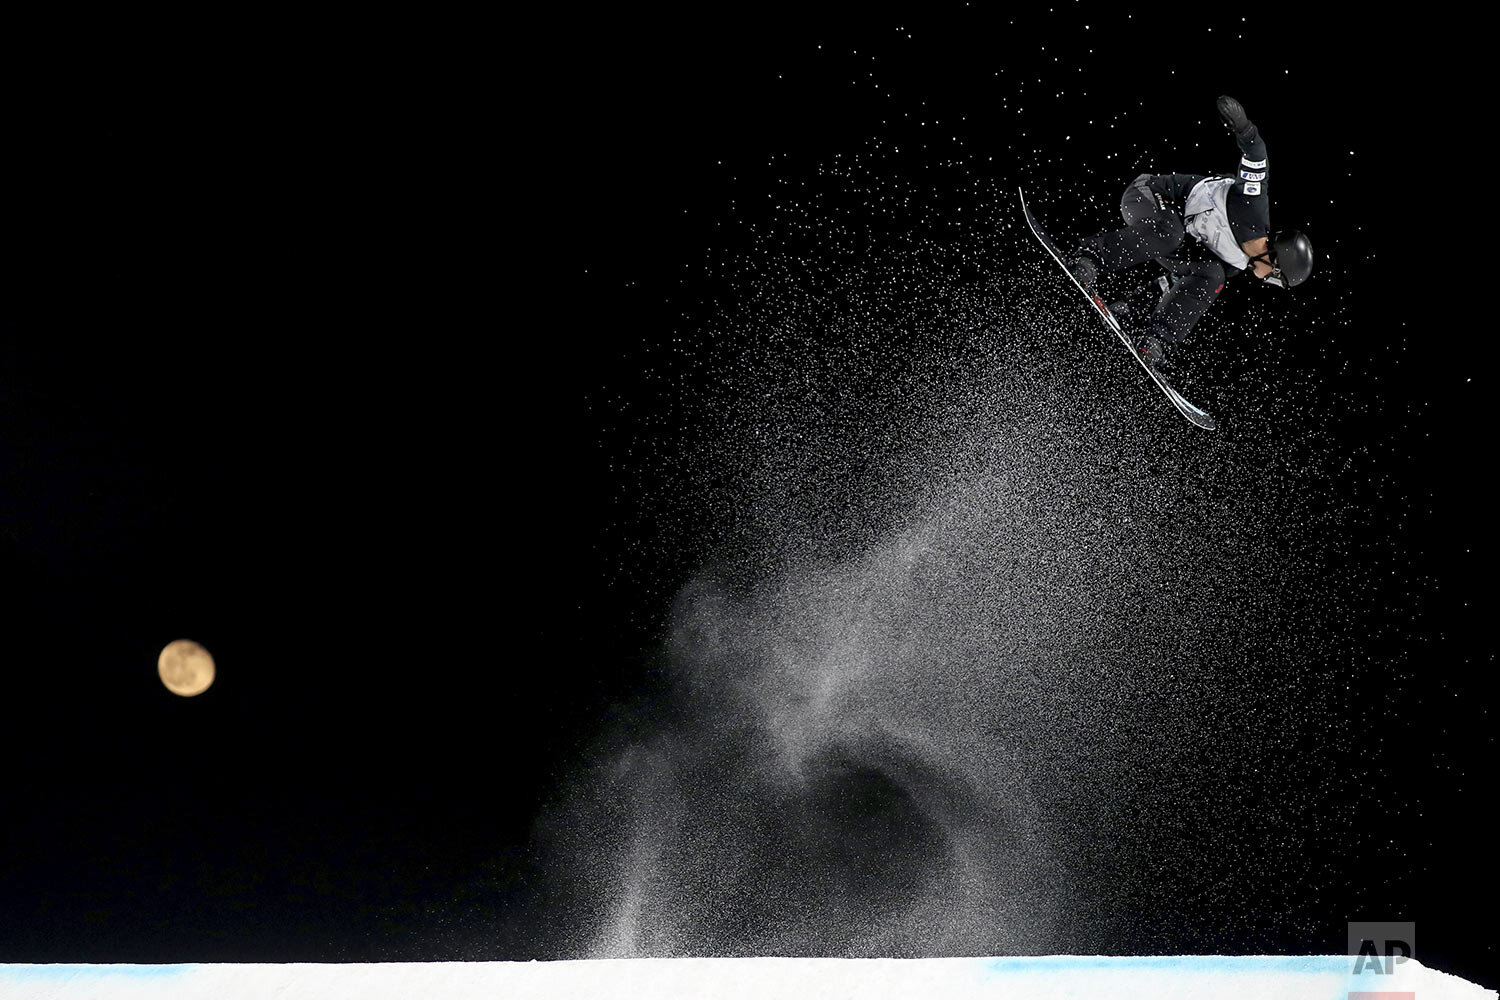  Japan's Ruki Tobita jumps, backdropped by the moon, during the Men's Snowboard Big Air in the 2019 FIS Big Air World Cup held at the Big Air Shougang in Beijing on Saturday, Dec. 14, 2019. (AP Photo/Ng Han Guan) 